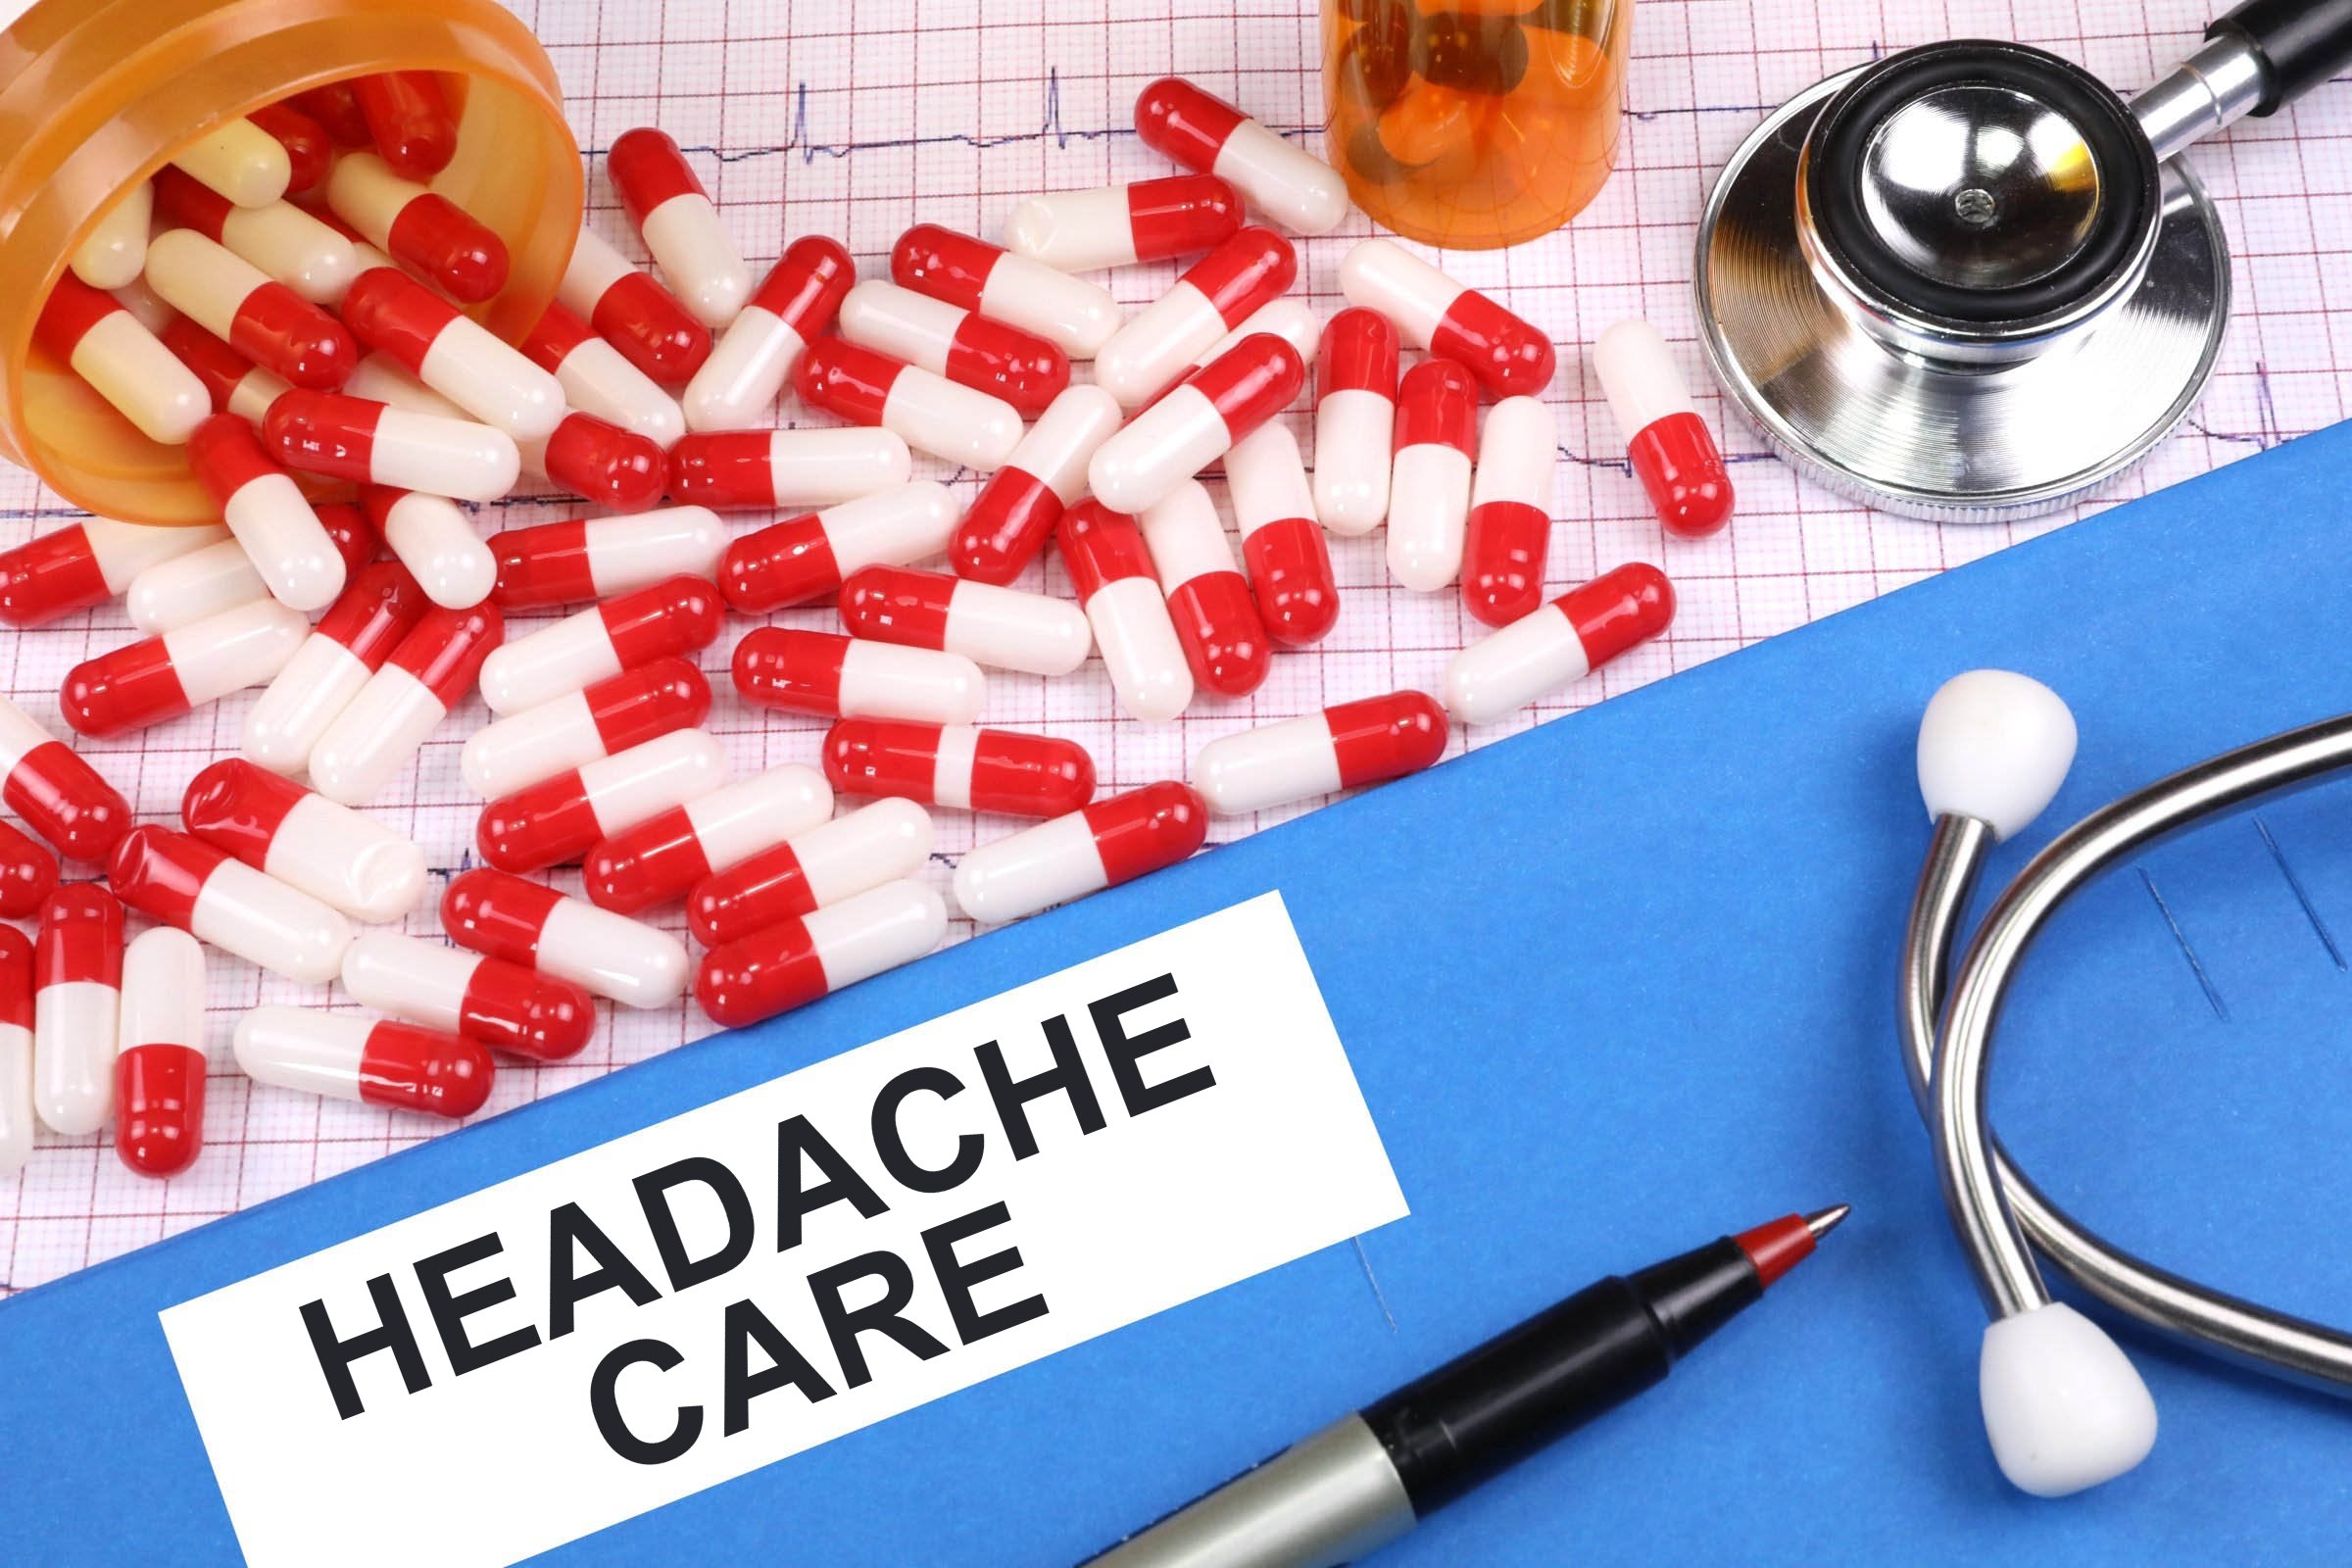 headache care